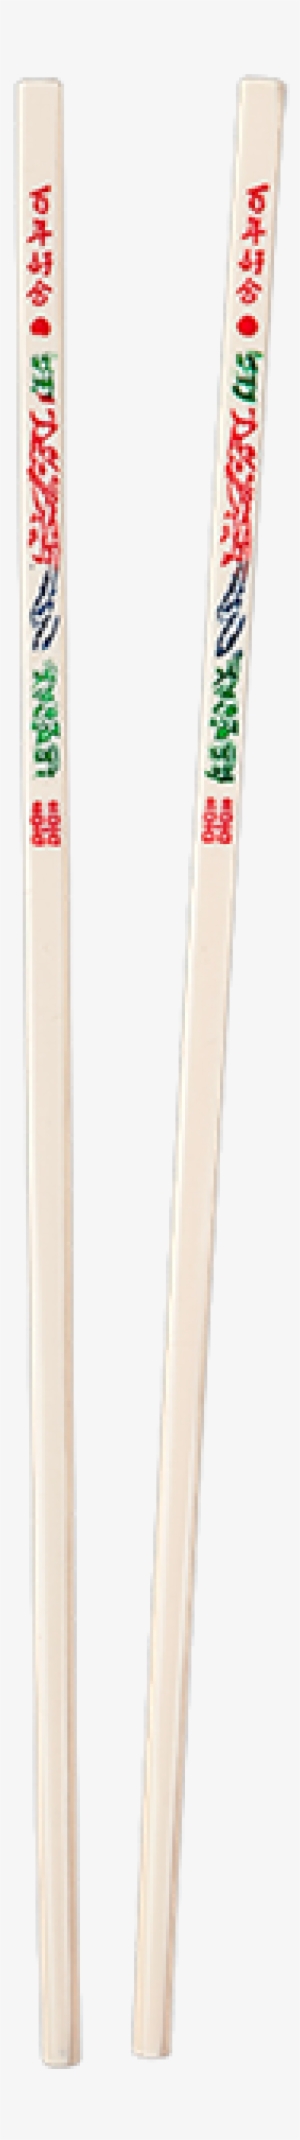 Chinese Chopsticks - Ski